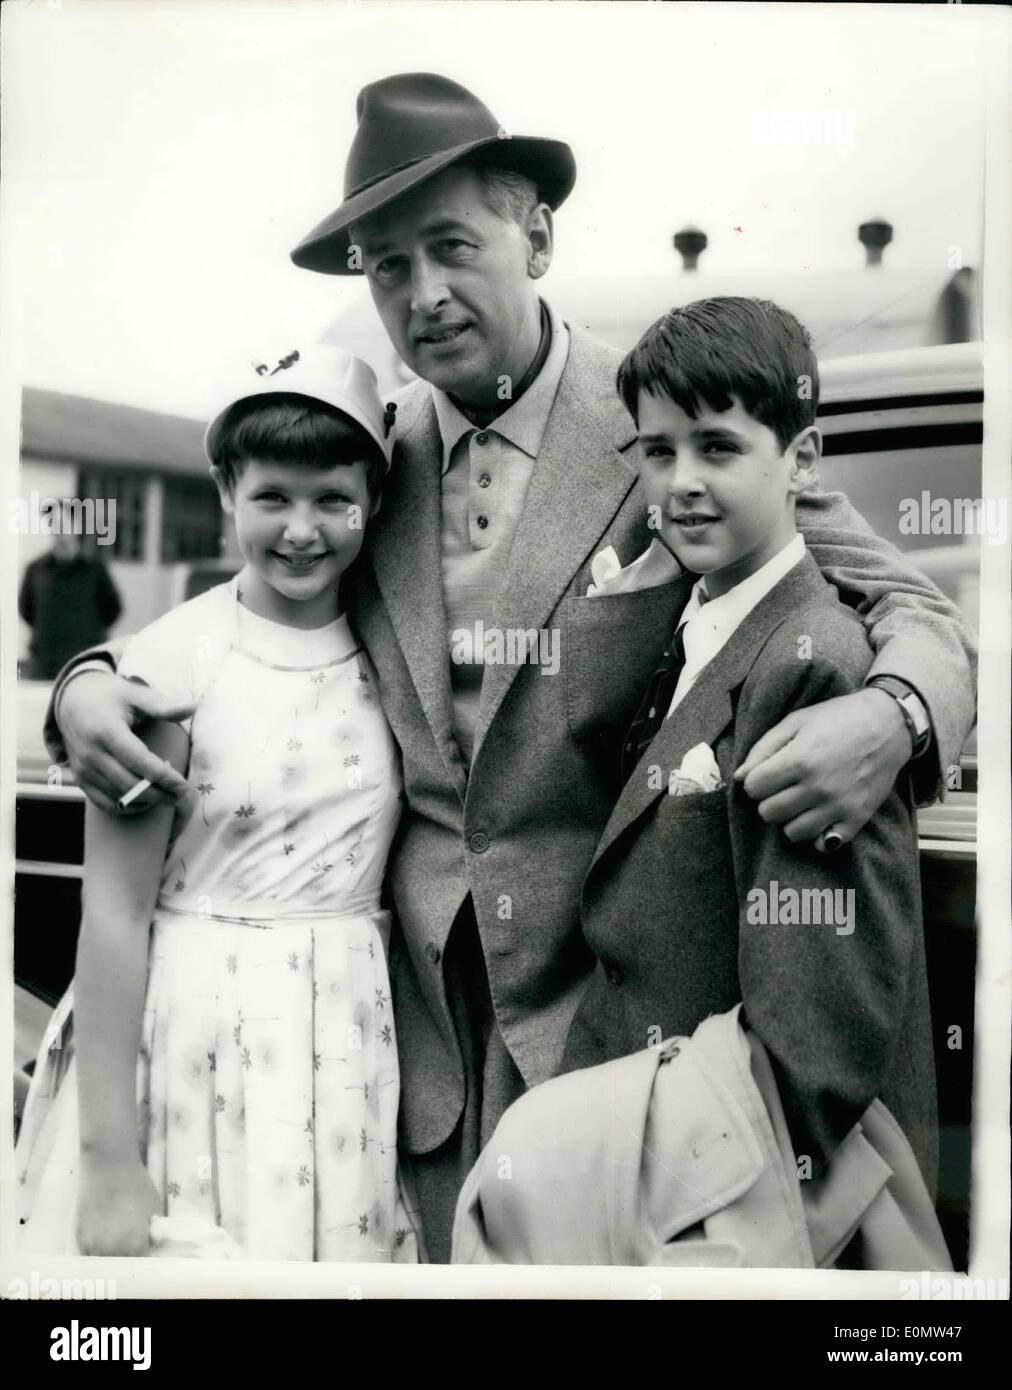 Lug. 07, 1956 - Stewart Granger e i bambini a Londra: Mostra fotografica britannica nata - naturalizzato americano stella Sen - Stewart Gr Foto Stock